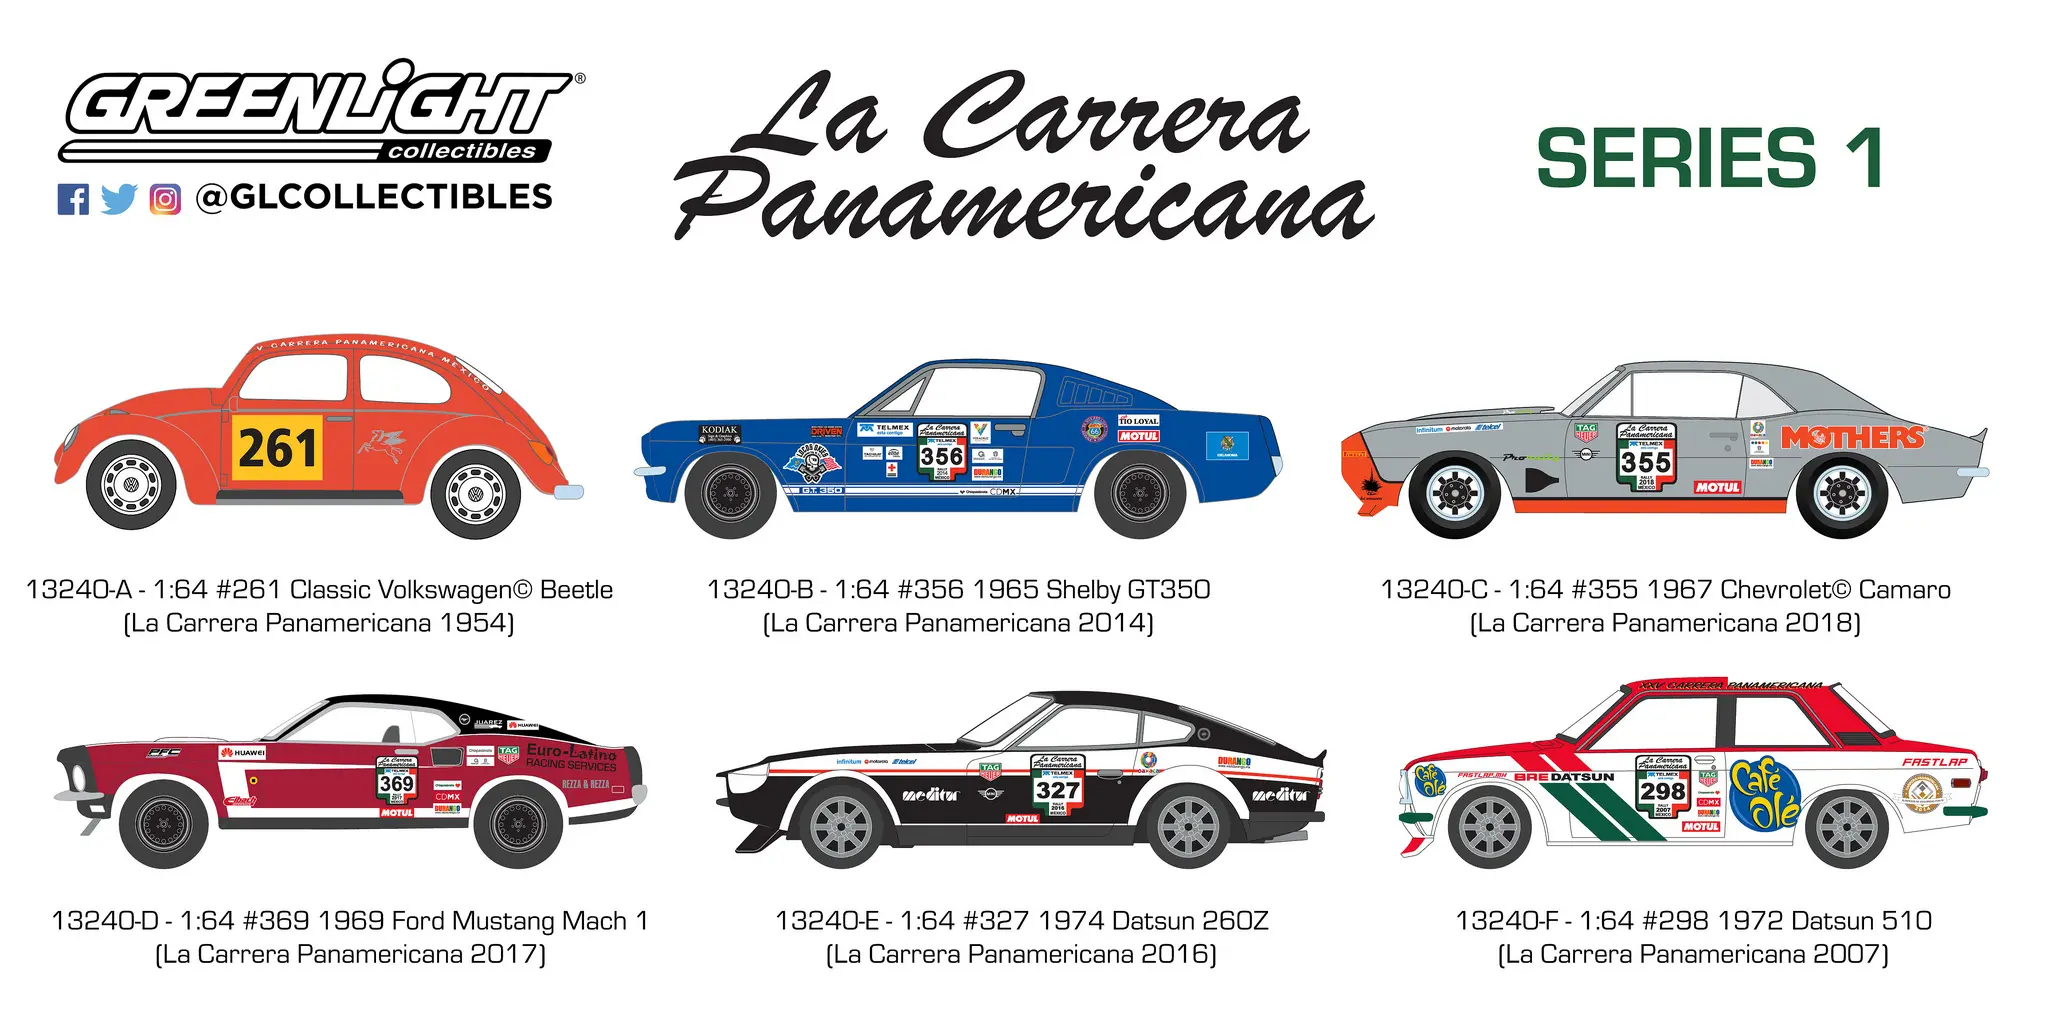 1972 Datsun 510 #298 13240F* La Carrera Panamericana Series 1 Greenlight